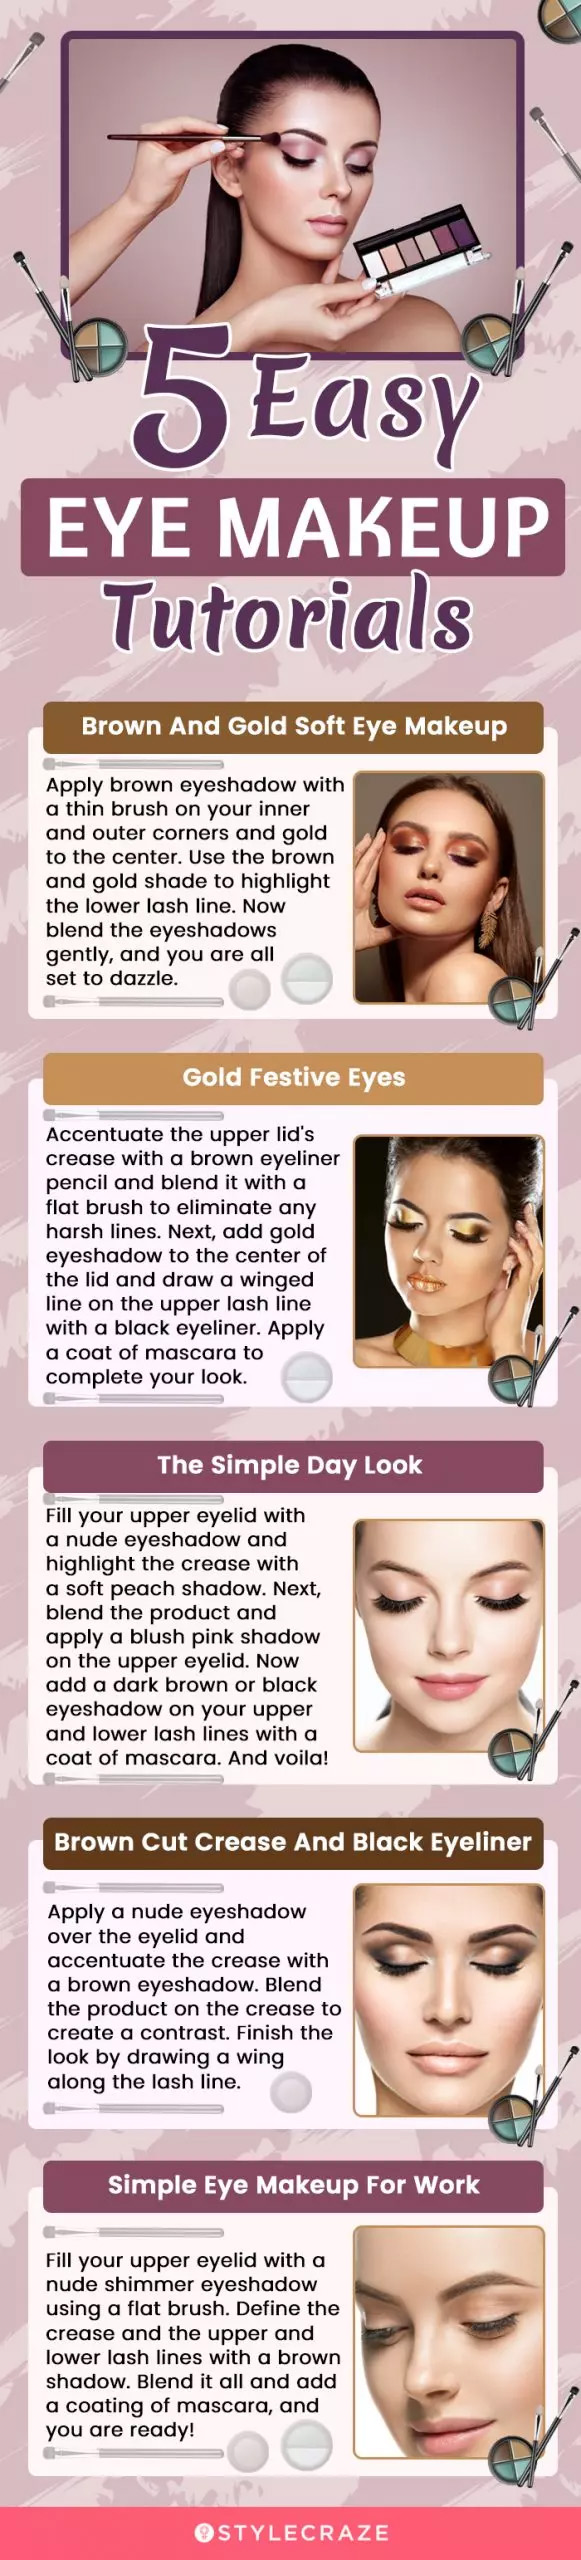 5 easy eye makeup tutorials (infographic)